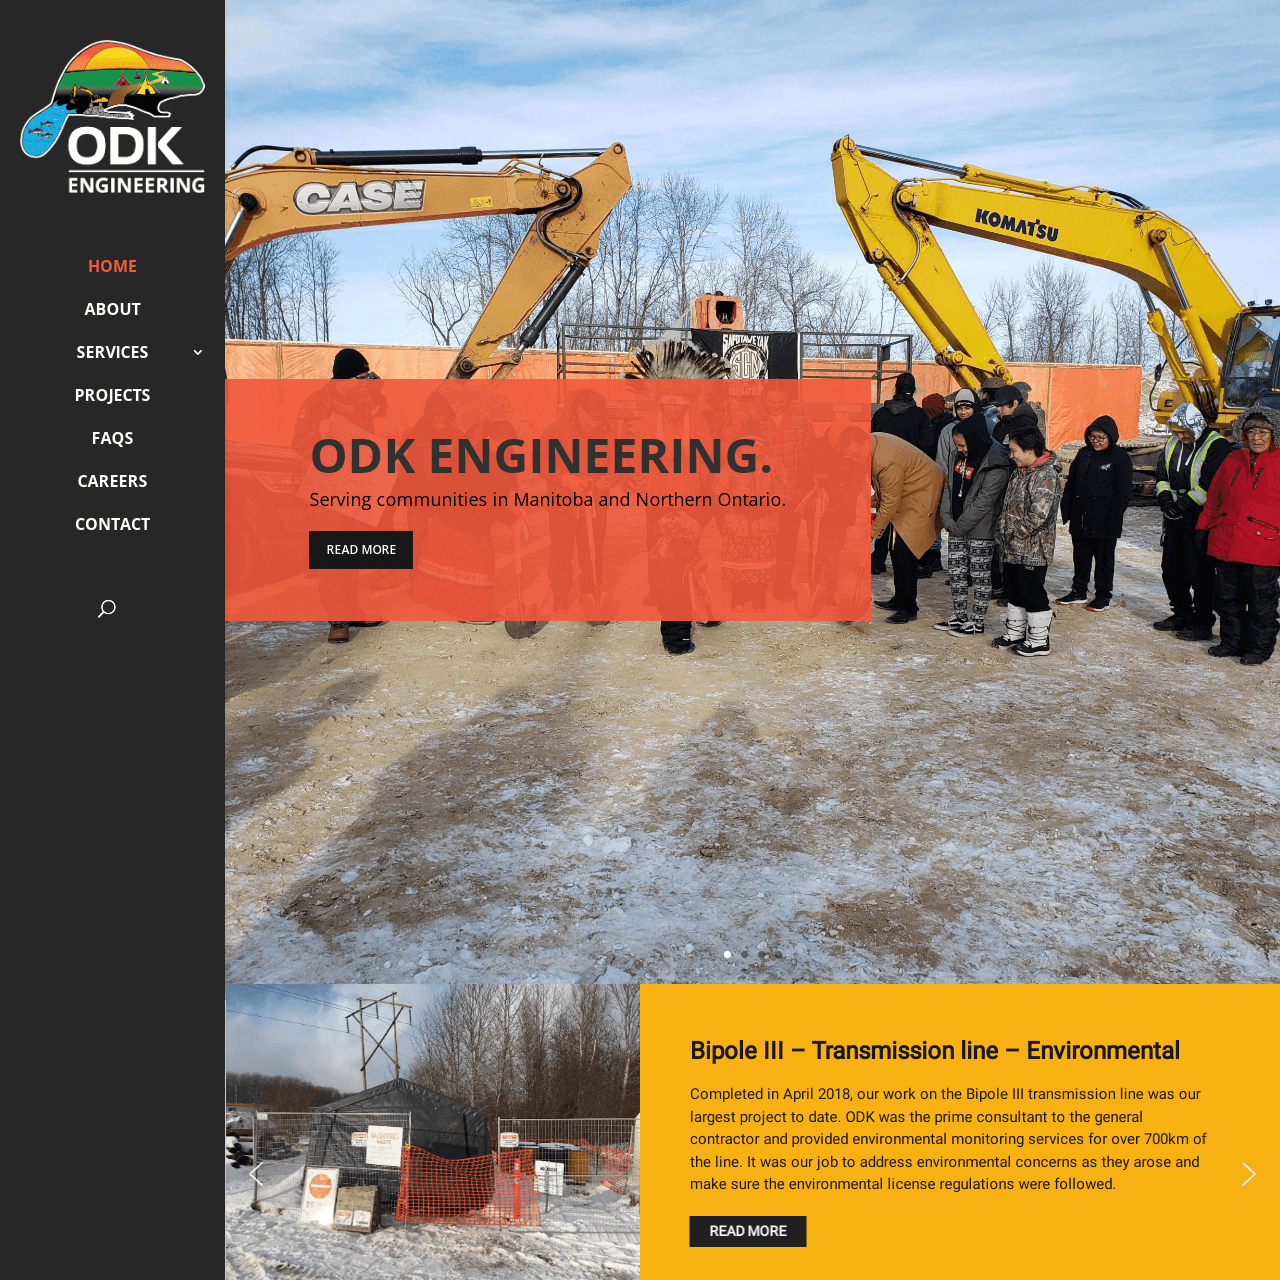 ODK Engineering website designed by 6P Marketing